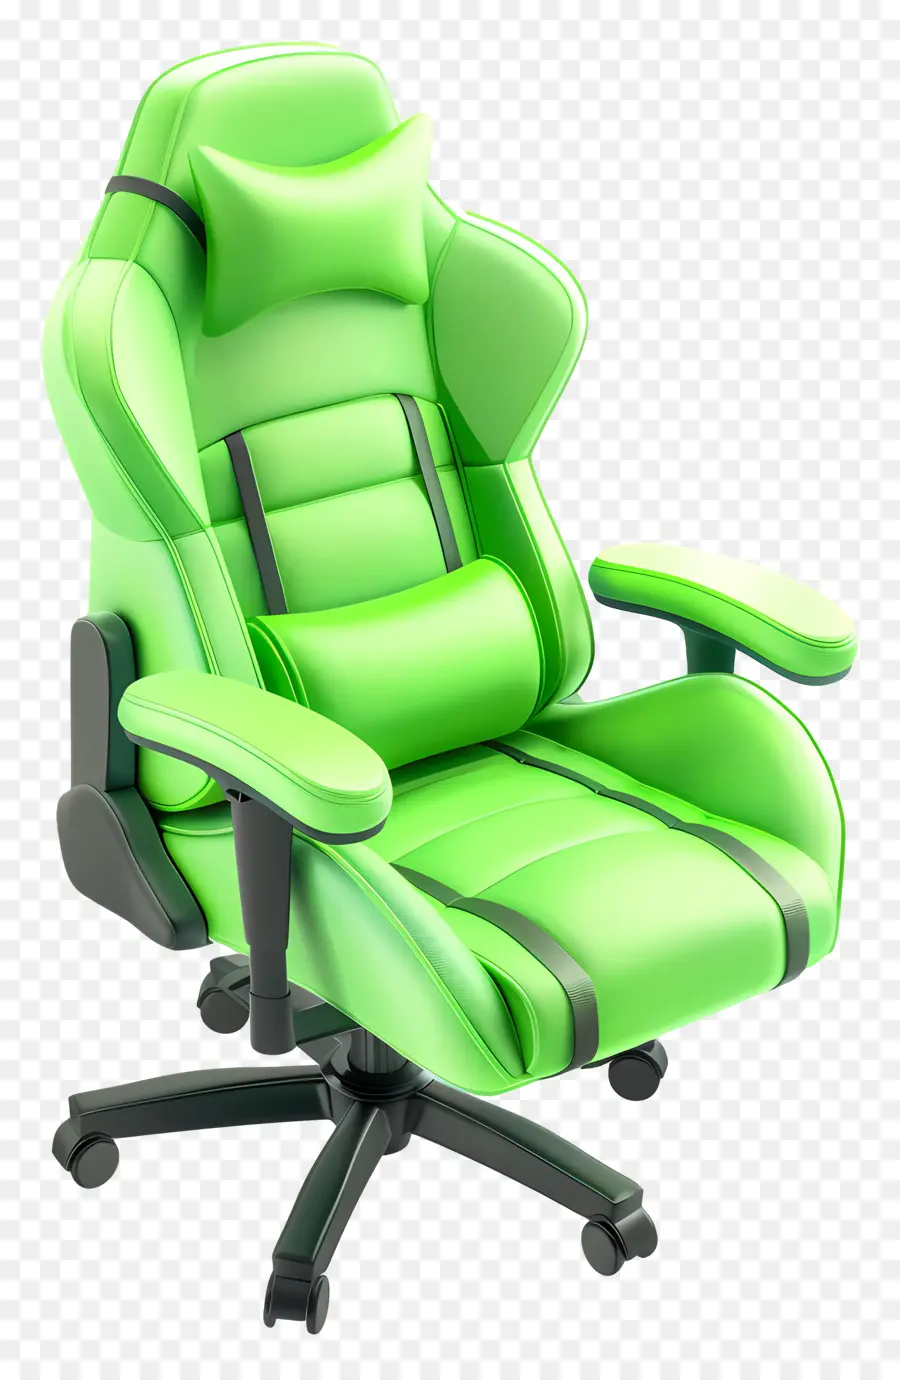 gaming chair green office chair reclining office chair leather office chair adjustable backrest chair